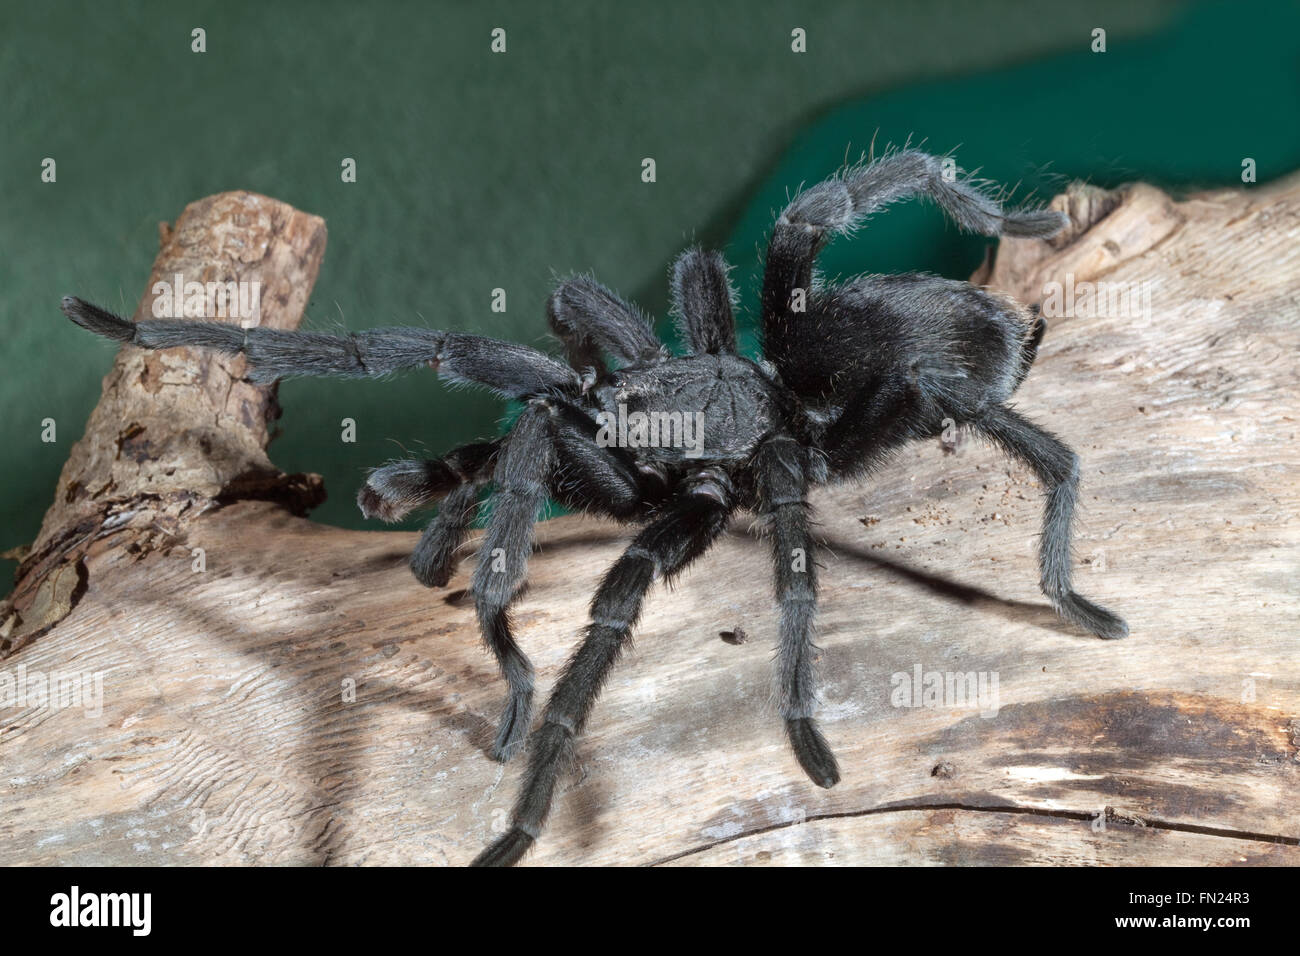 Brazilian Black Tarantula Spider (Grammostola pulchra). Raising a foreleg, indicative of an apprehensive, warning, posture. Stock Photo